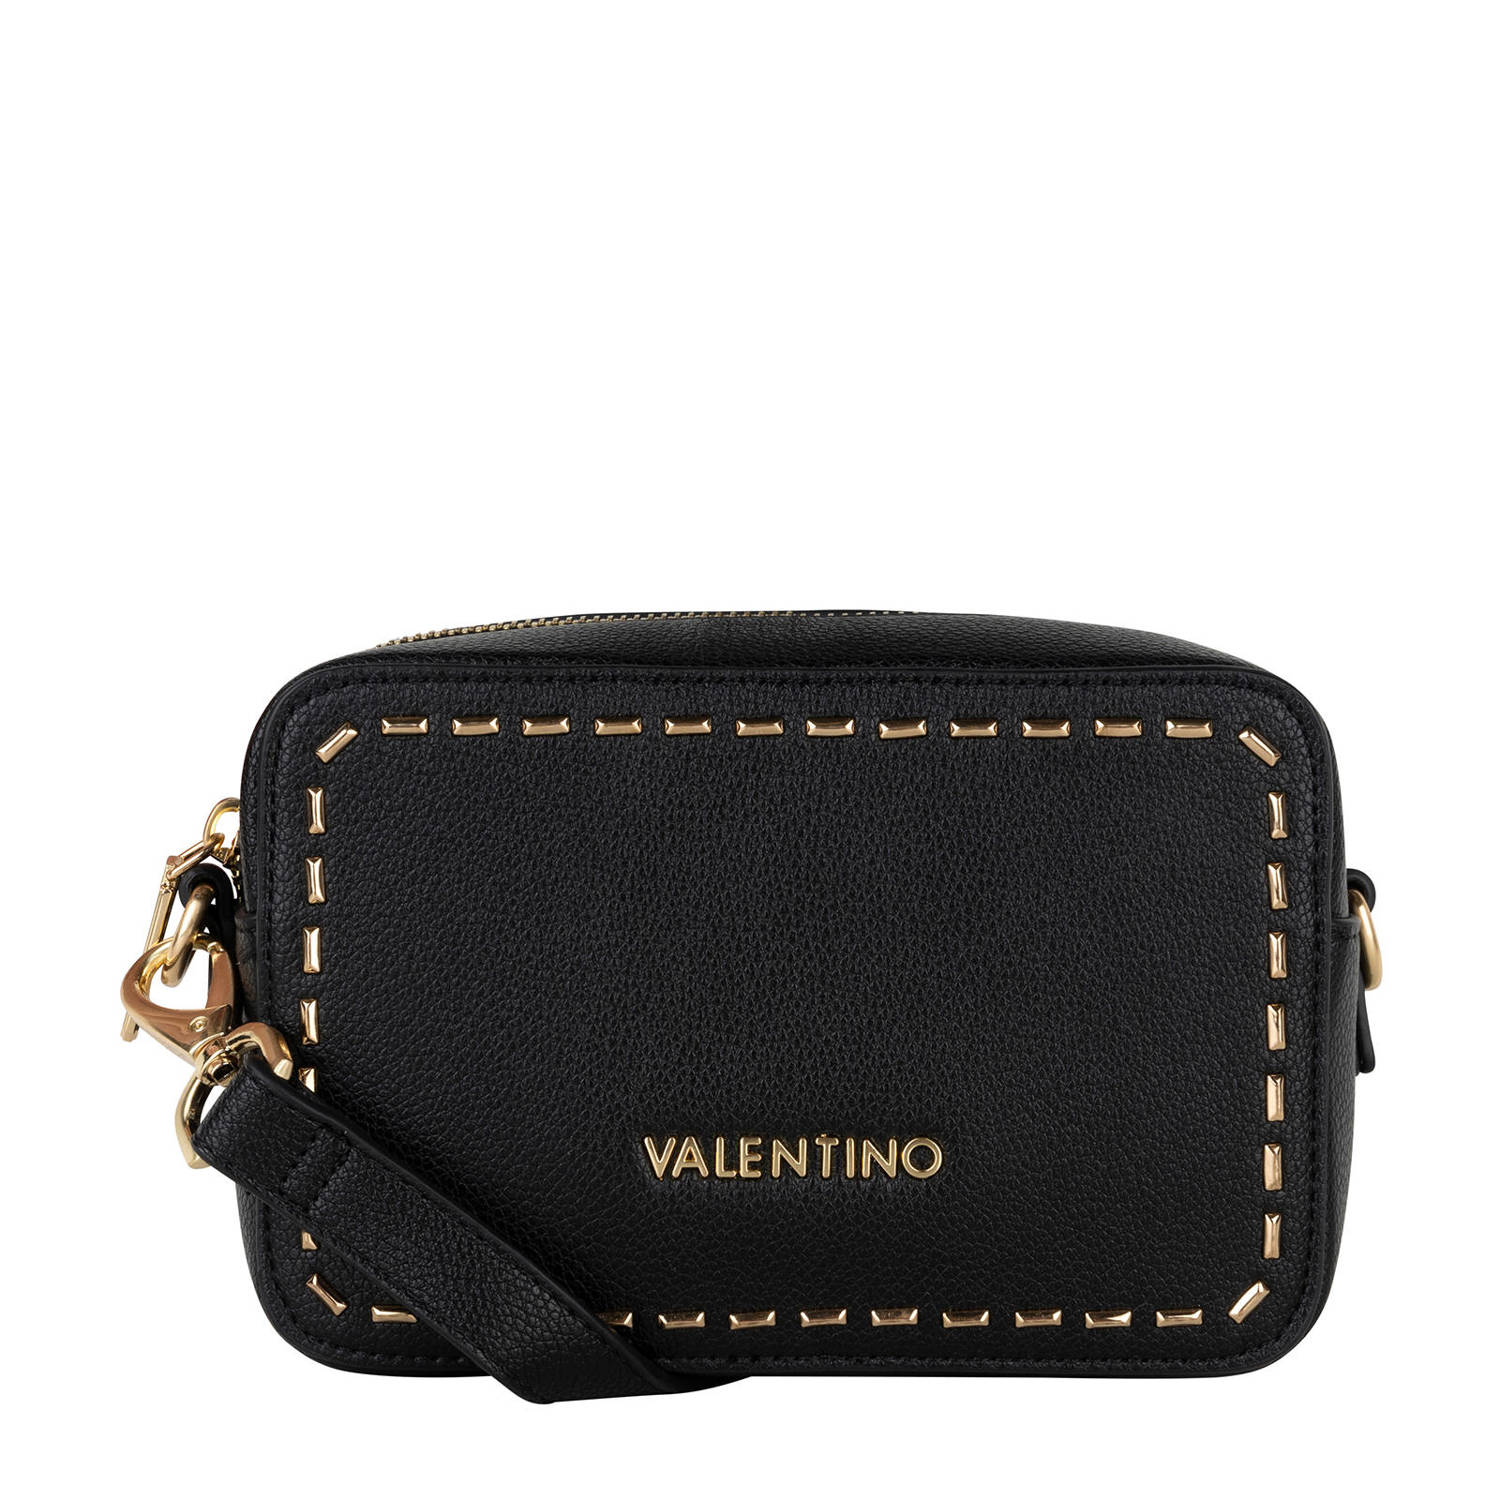 Valentino Bags crossbody tas Dolomiti zwart